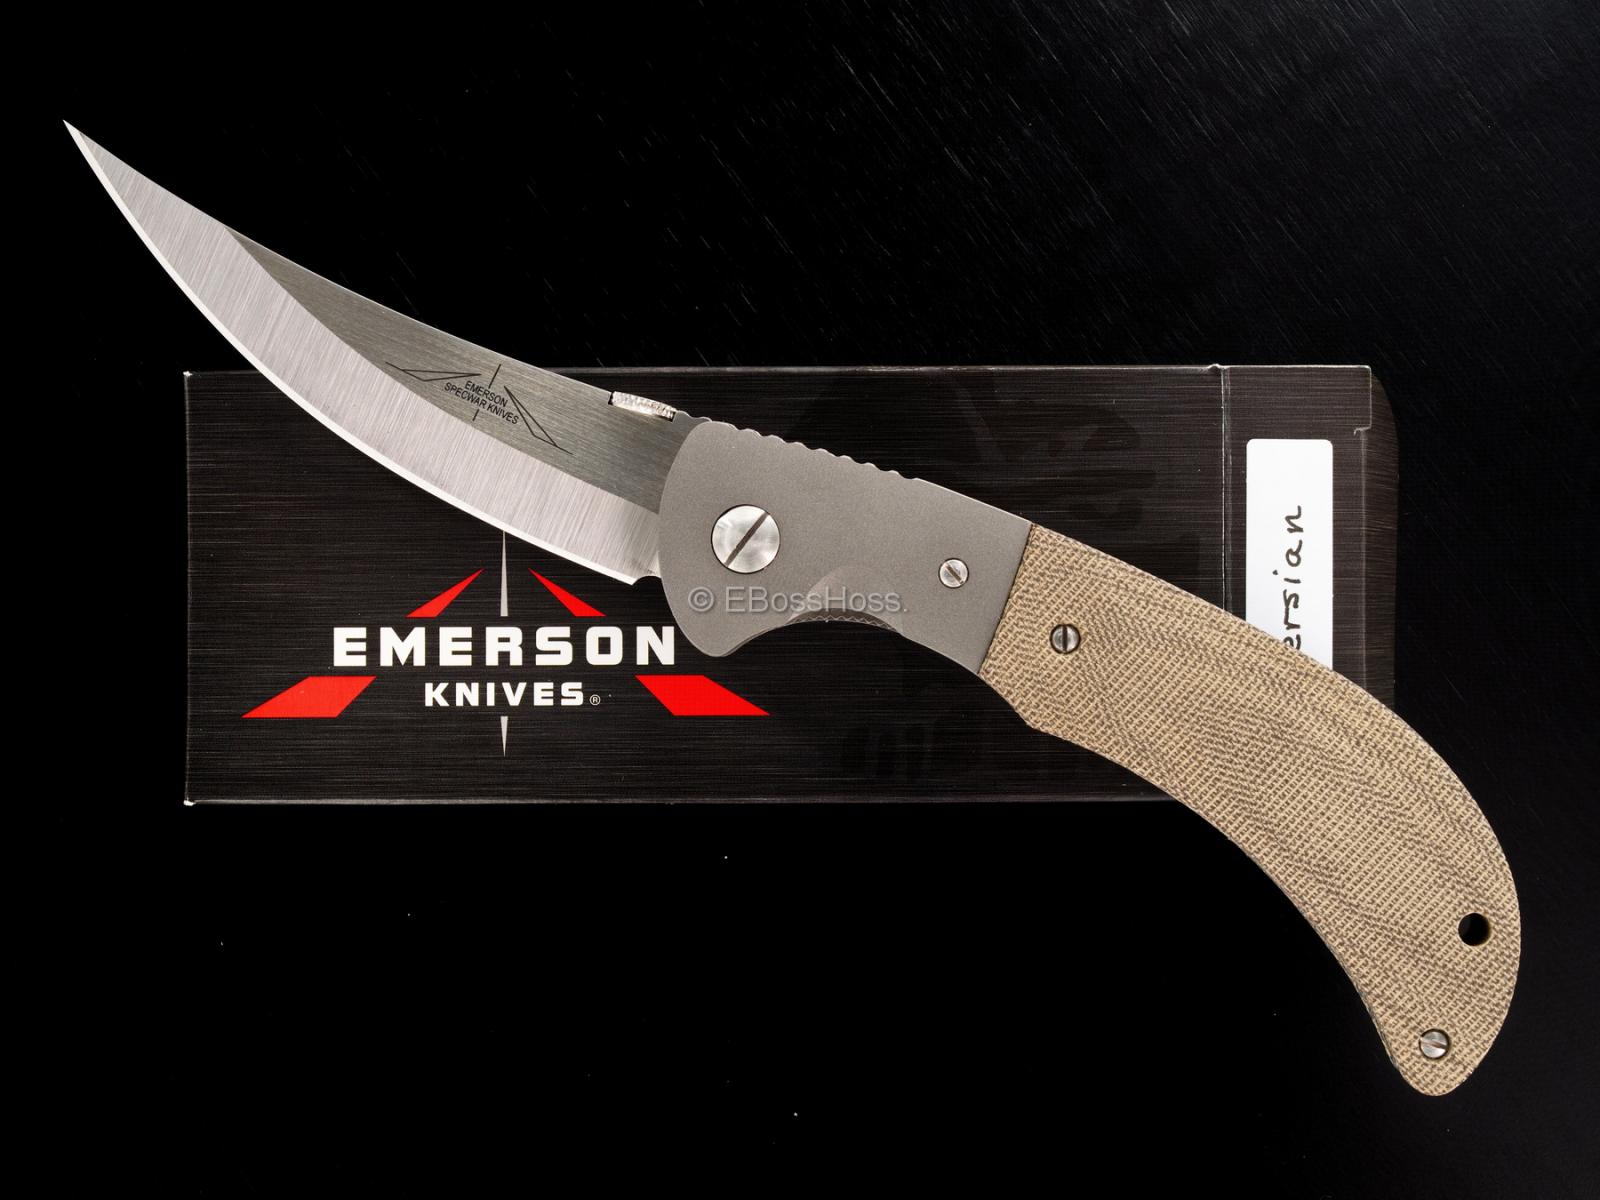 Ernie Emerson Custom Persian